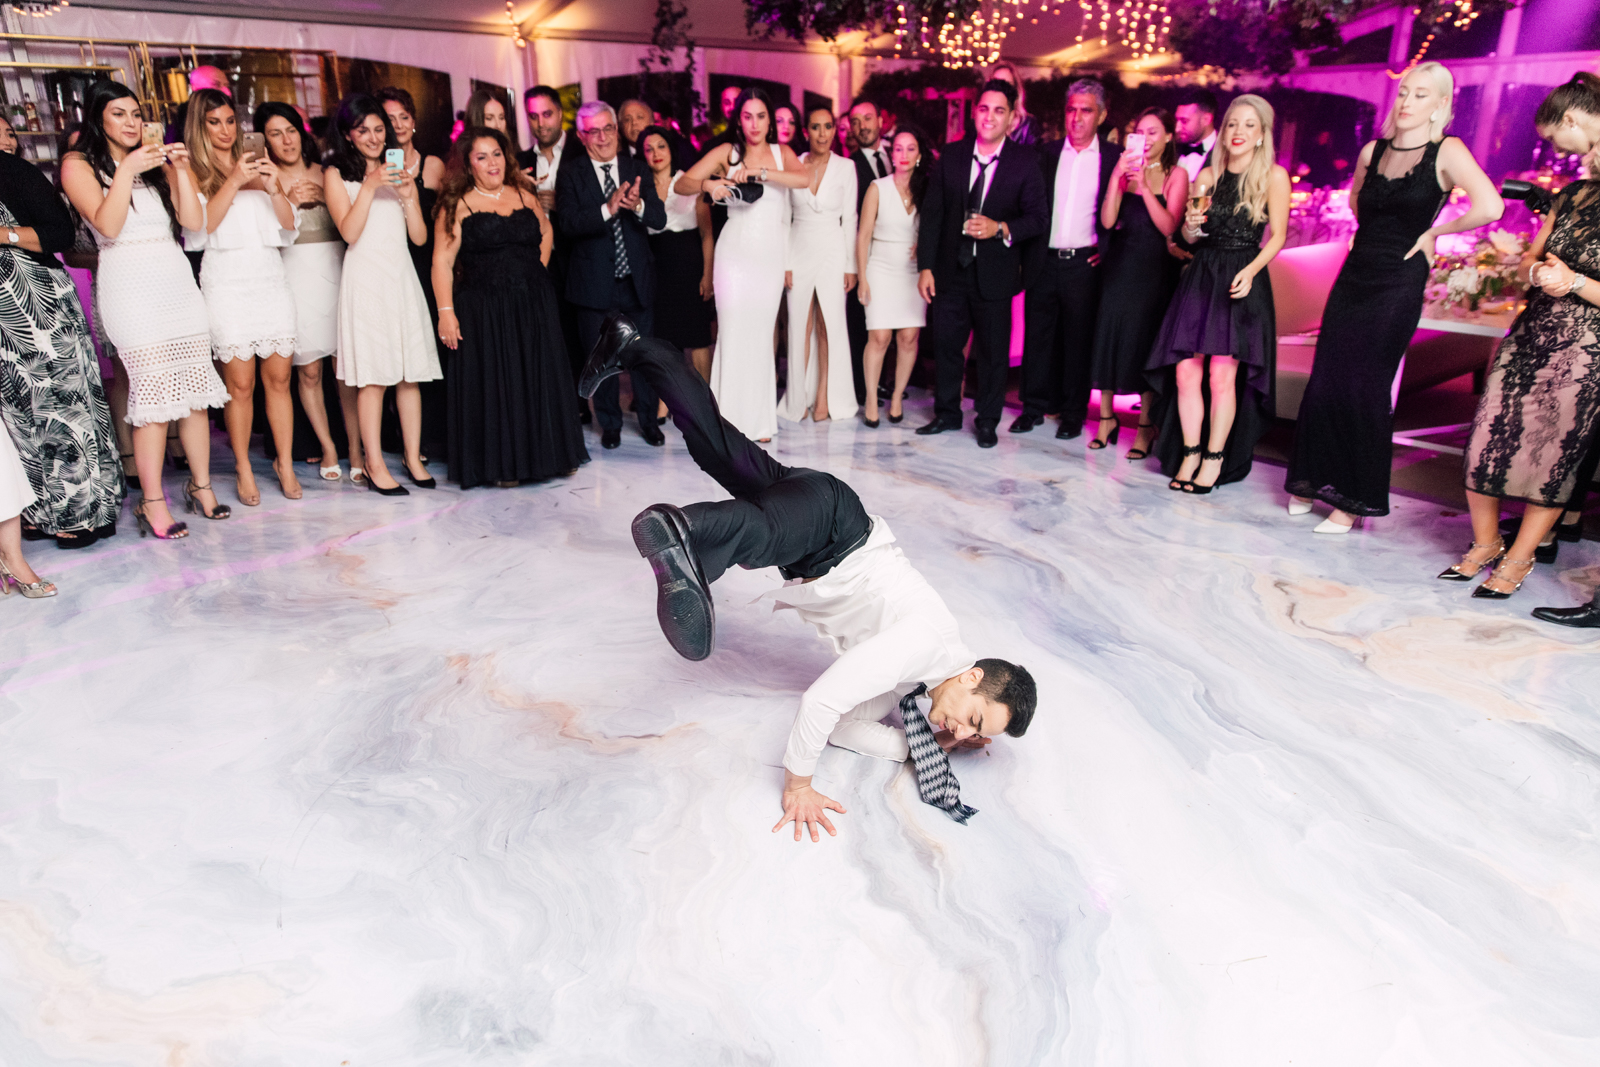 Breakdancing wedding guest